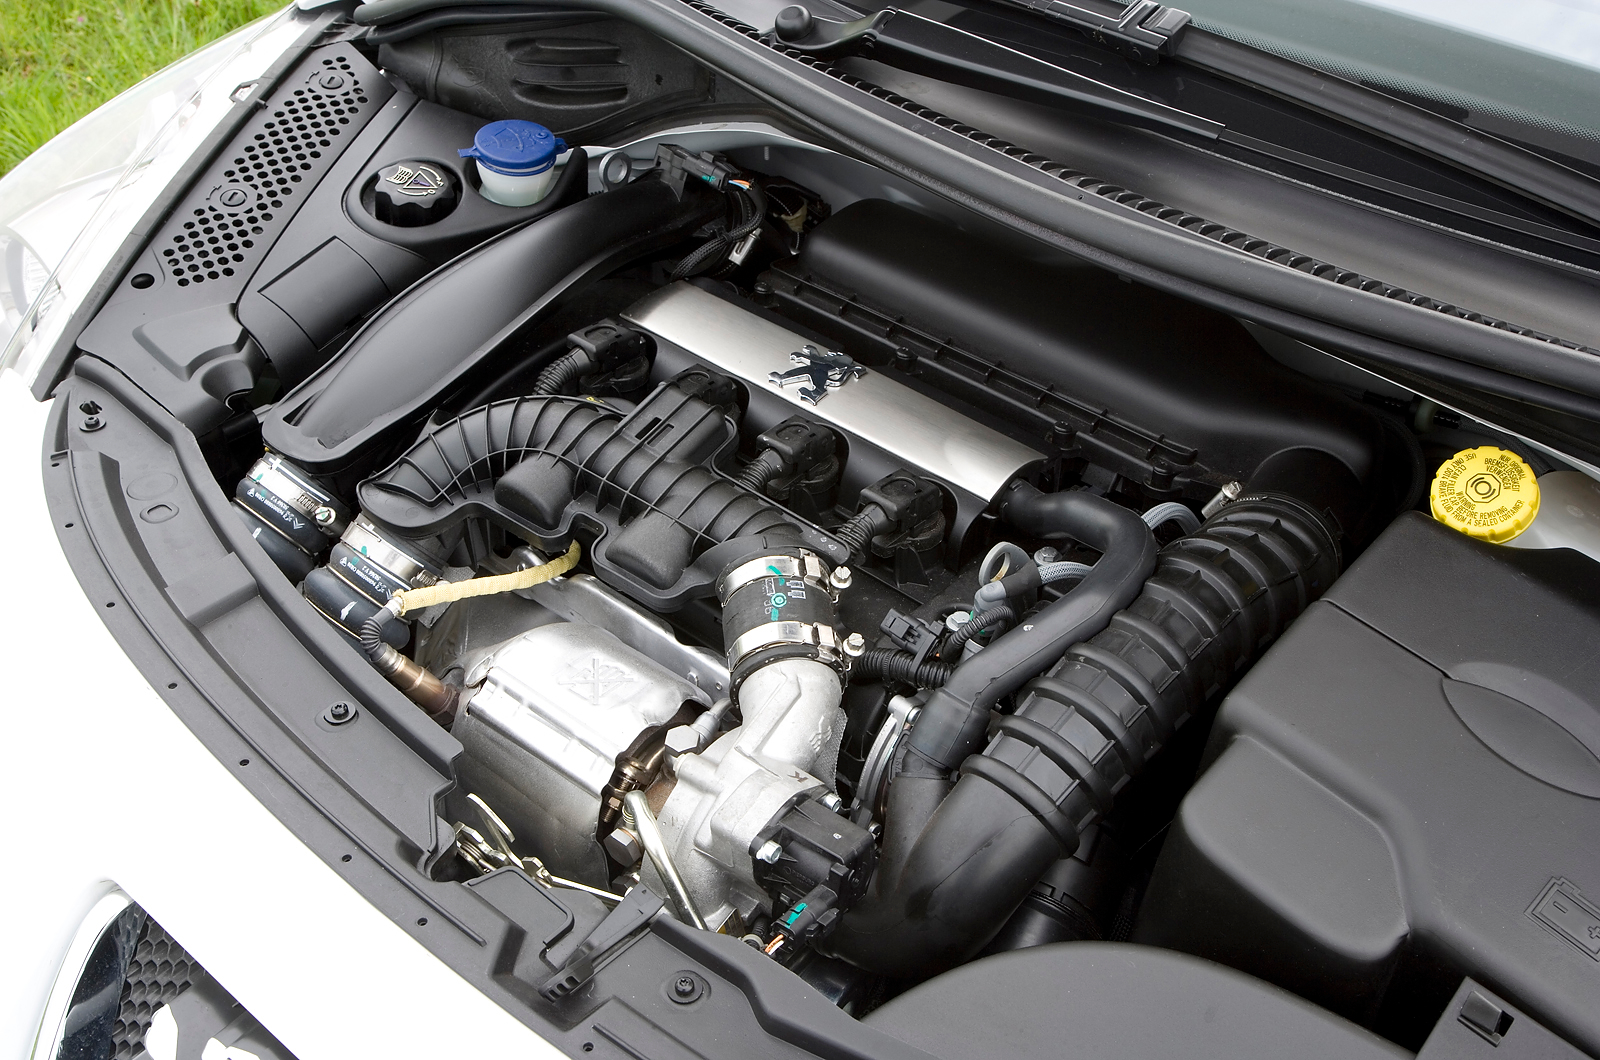 1.6-litre Peugeot 207 petrol engine